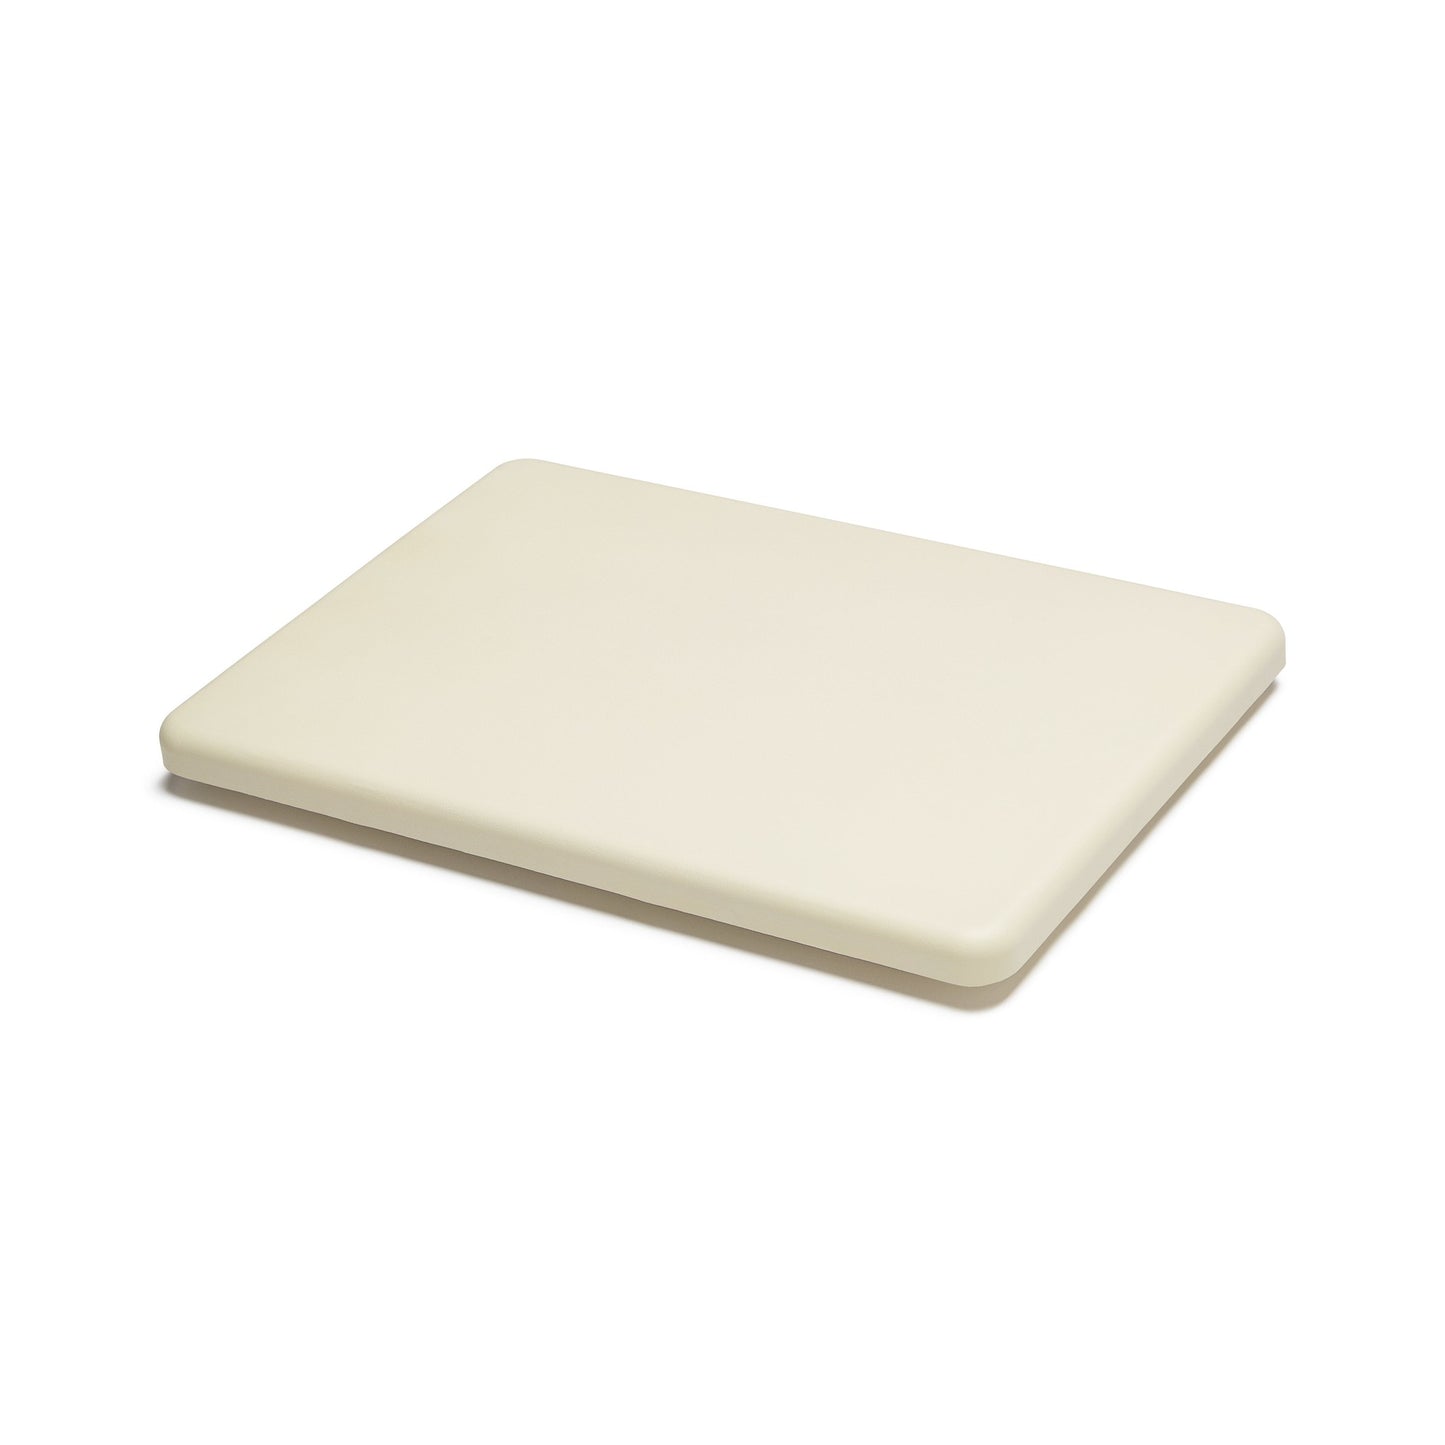 Seachrome Lifestyle & Wellness 16" W x 11" D Almond Polyurethane Closed Cell Foam Silhouette Seat Pad